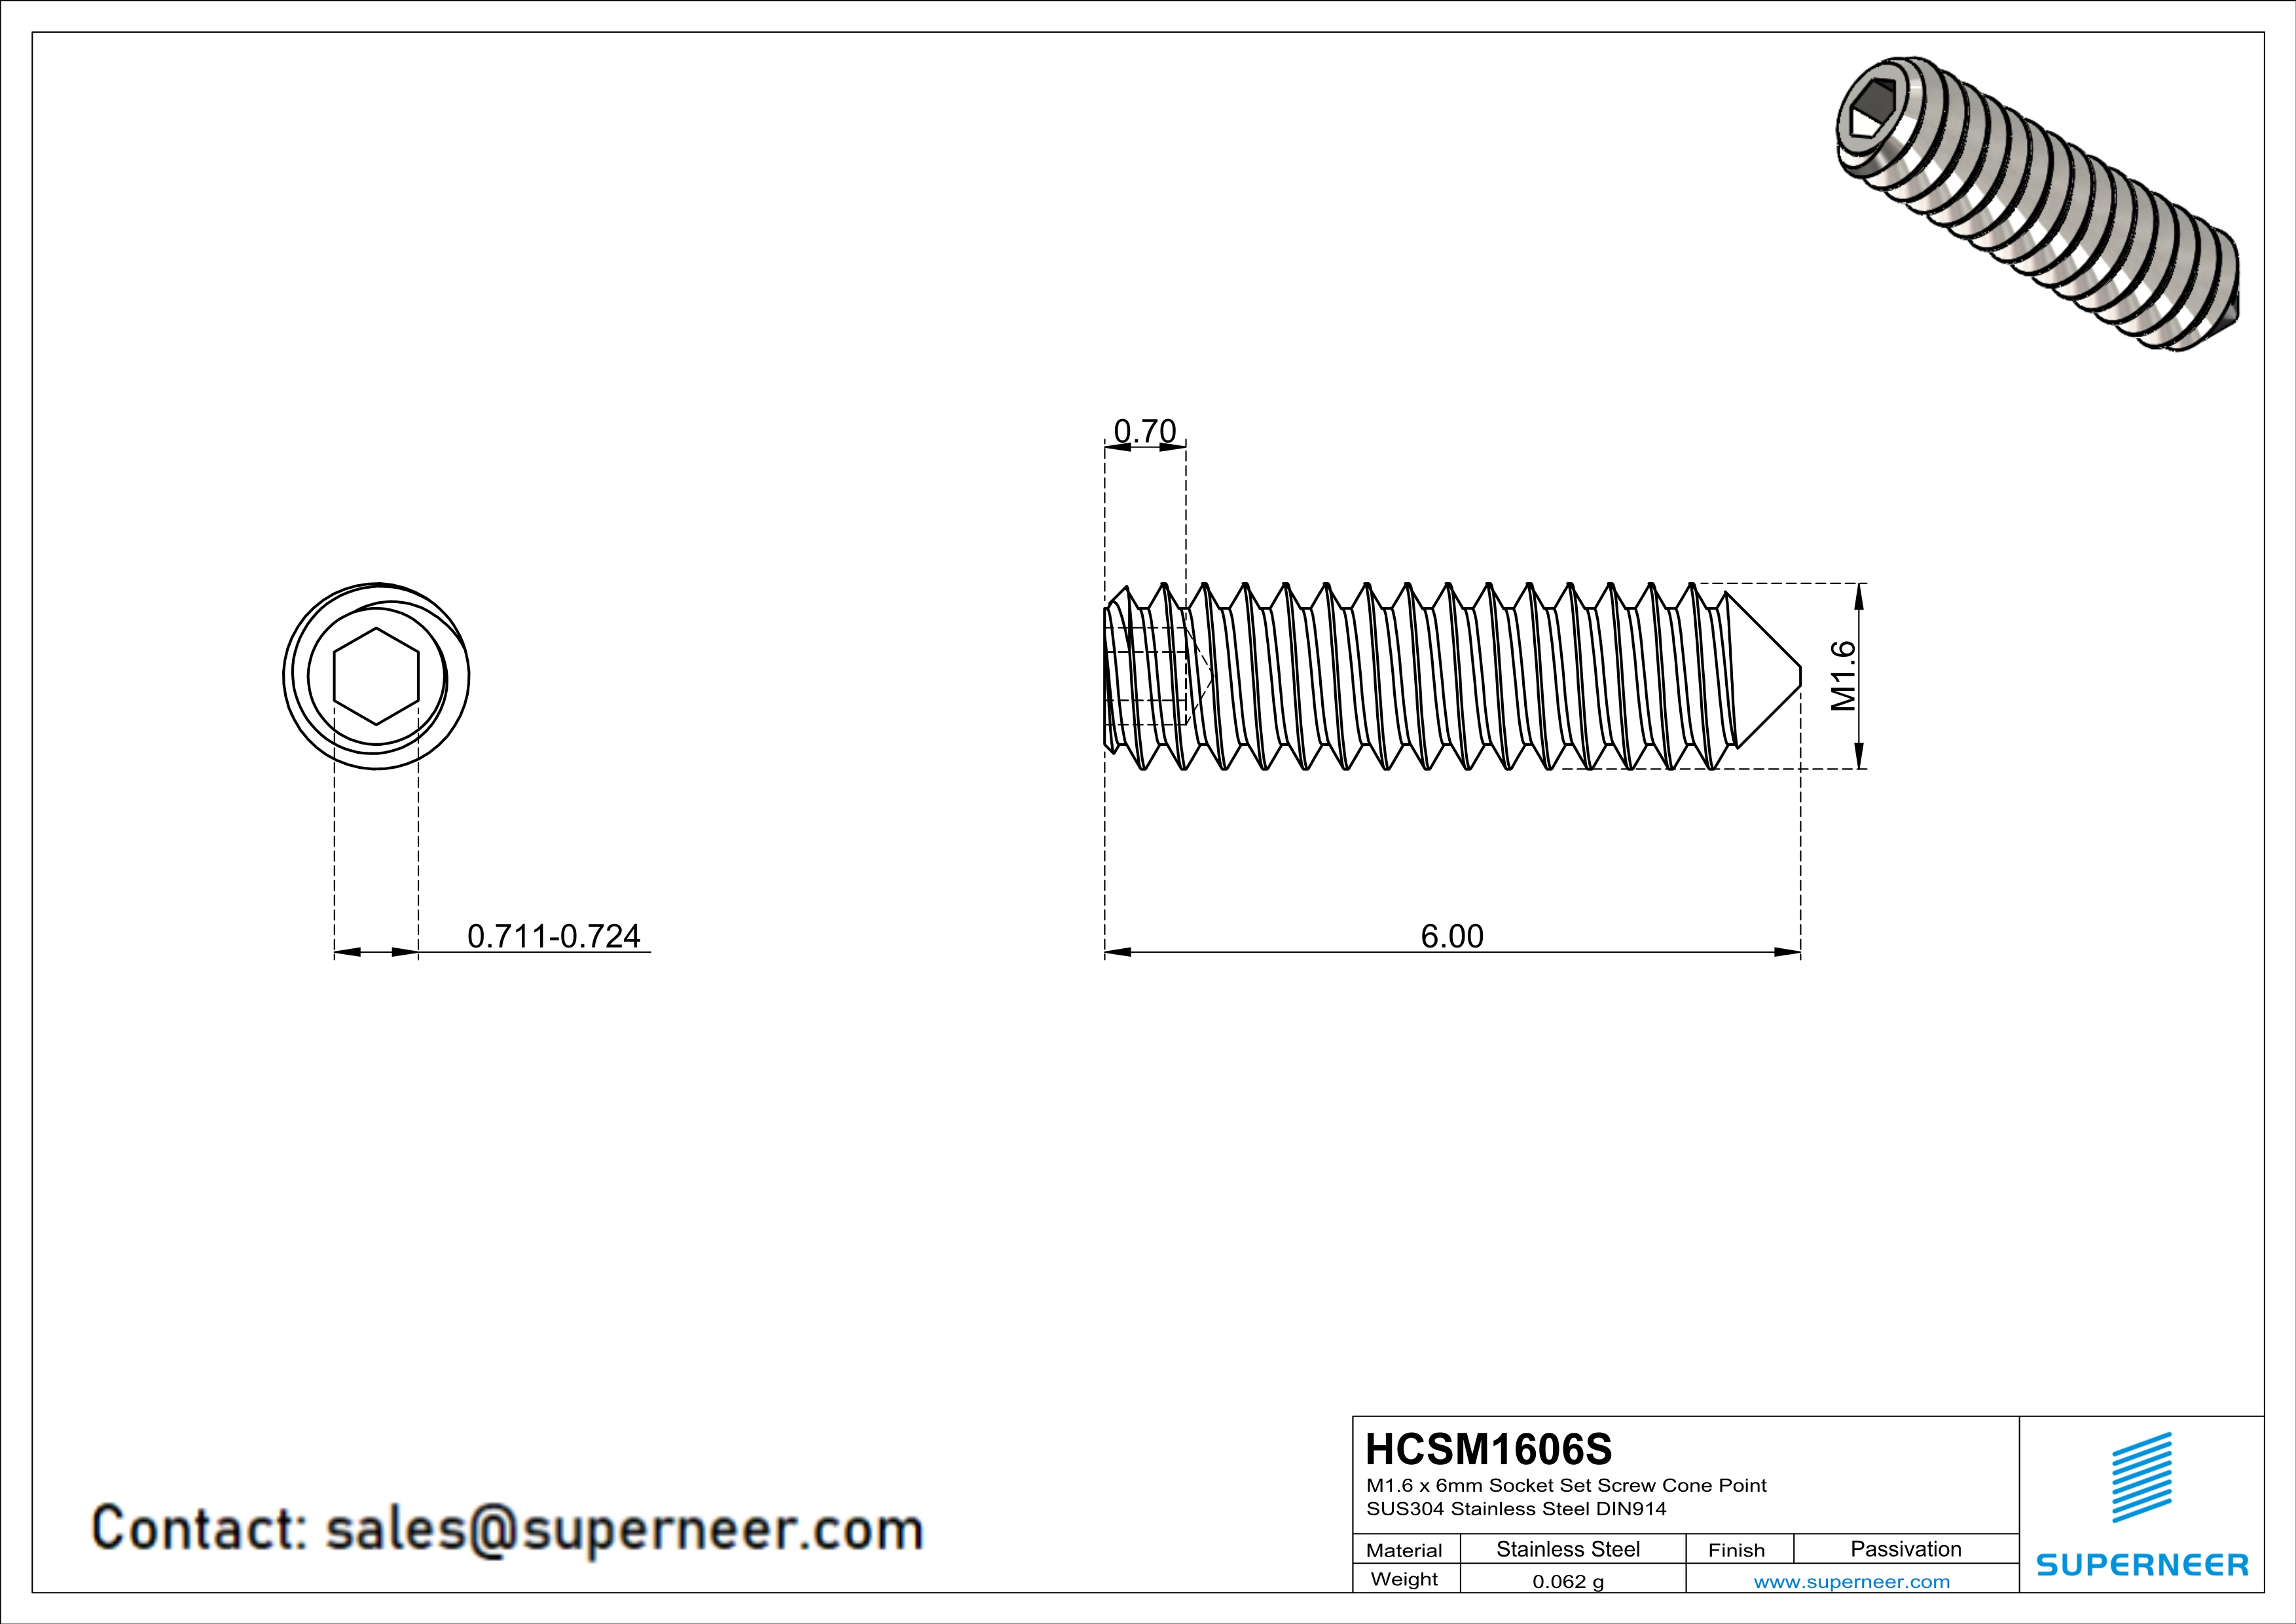 M1.6 x 6mm Socket Set Screw Cone Point SUS304 Stainless Steel Inox DIN914